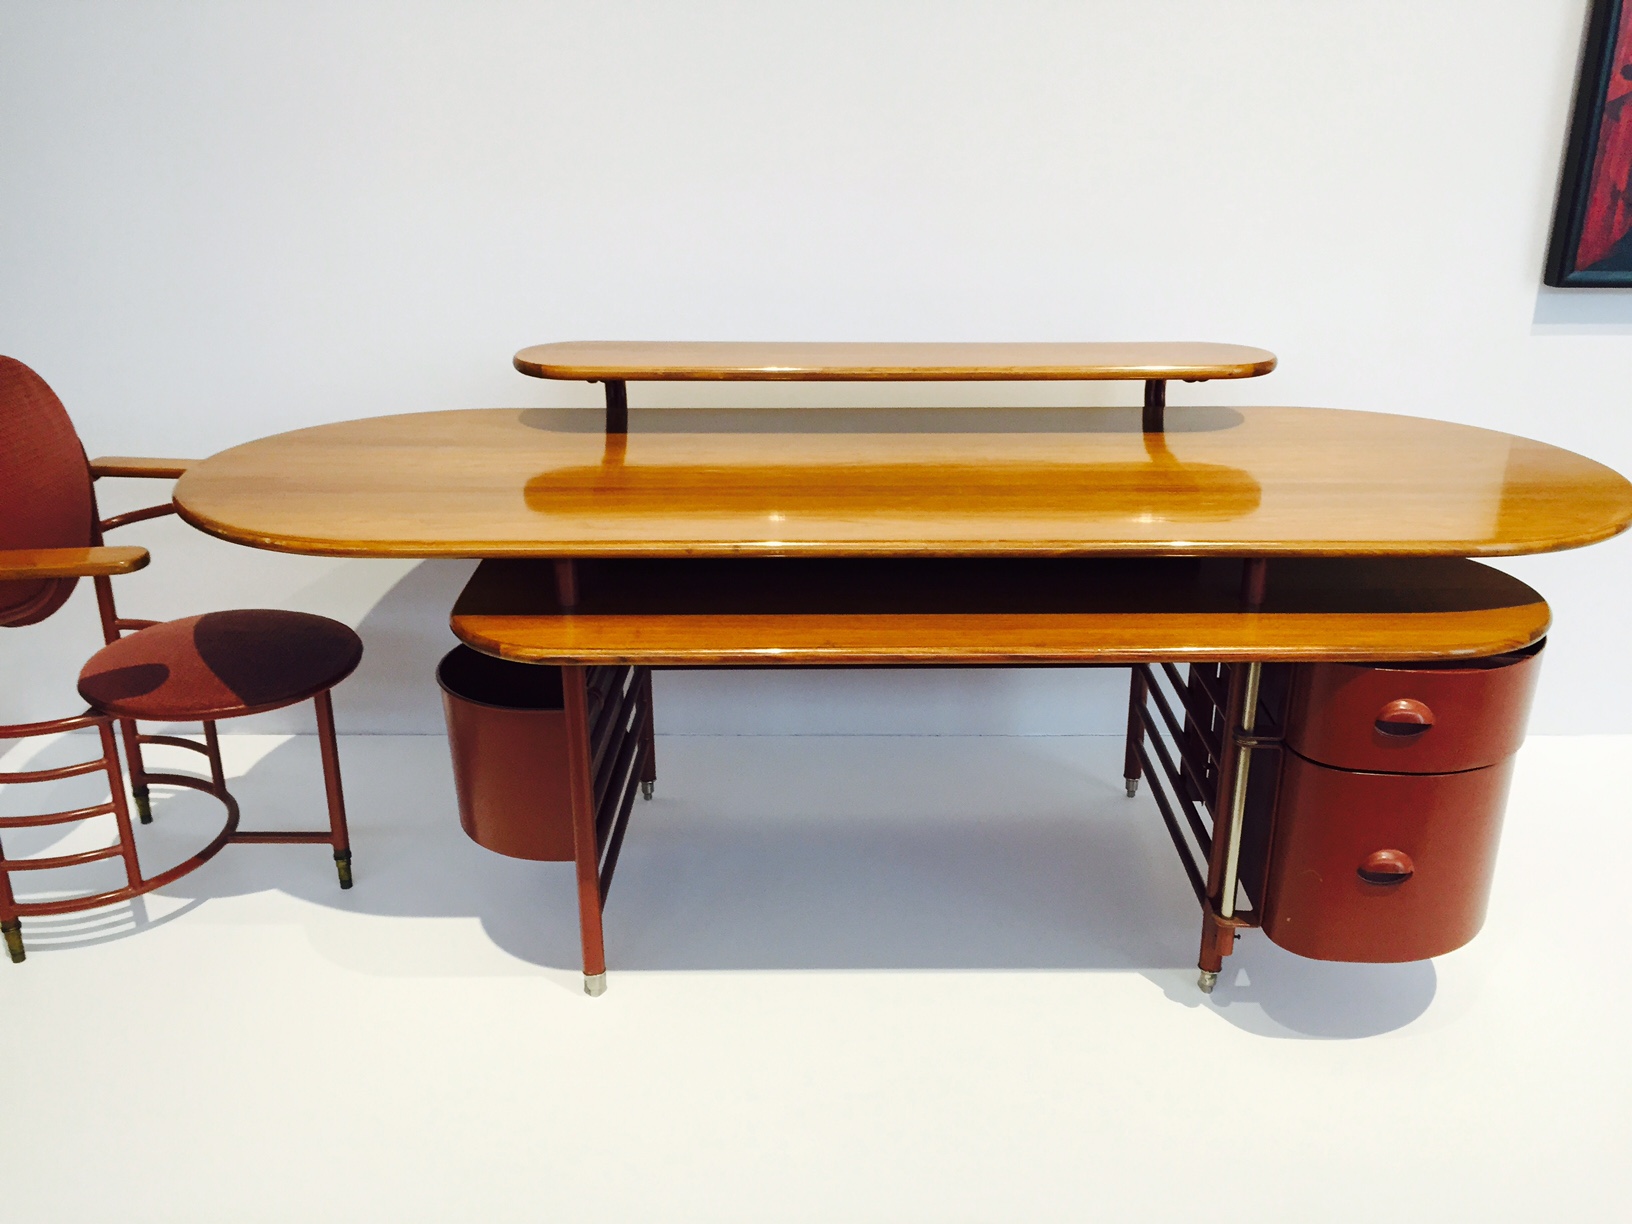 A Frank Lloyd Wright desk and Chair